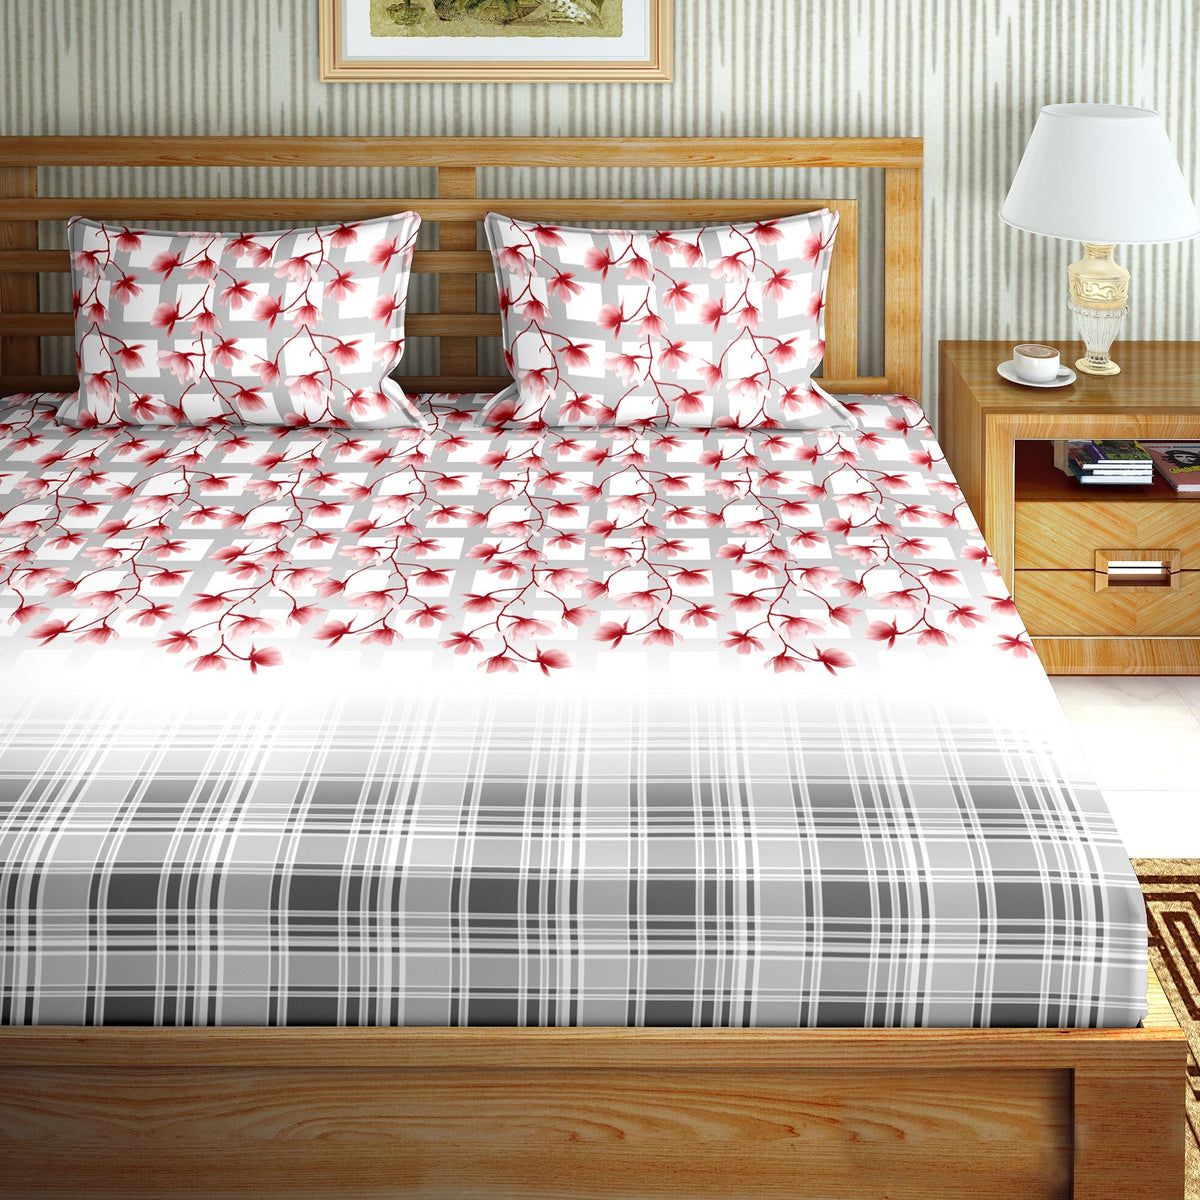 Buy Super King Size Bed Sheets Online | Bellacasa